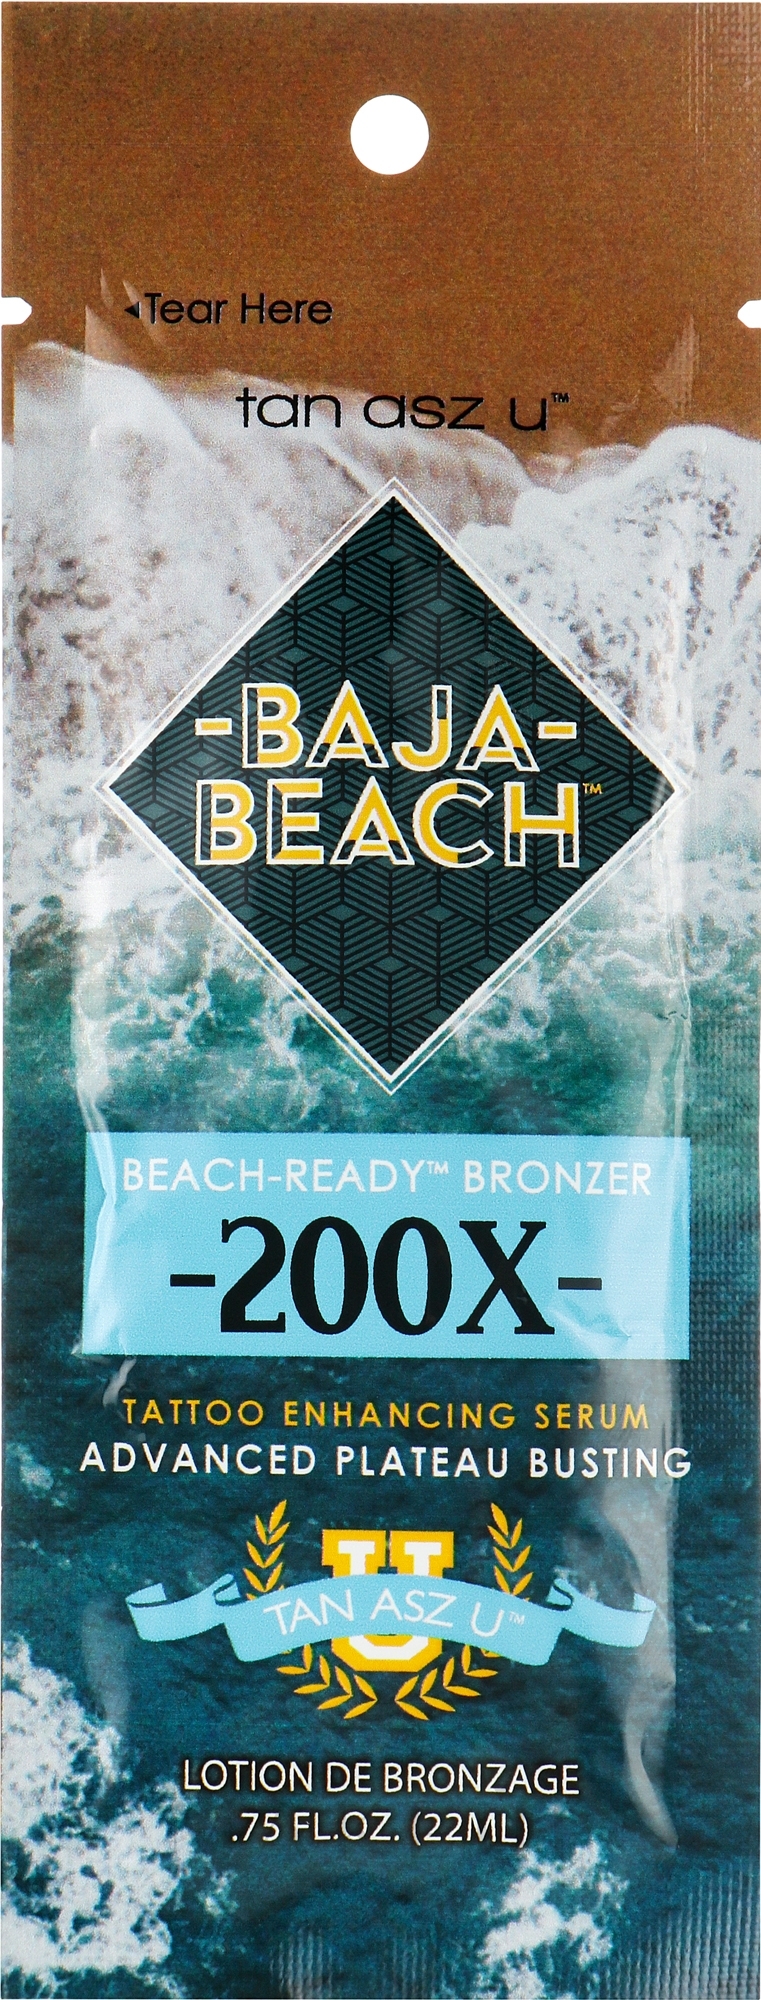 Solariumcreme mit Bronze-Effekt - Tan Asz U Baja Beach 200X Beach-Ready Bronzer (Probe)  — Bild 22 ml